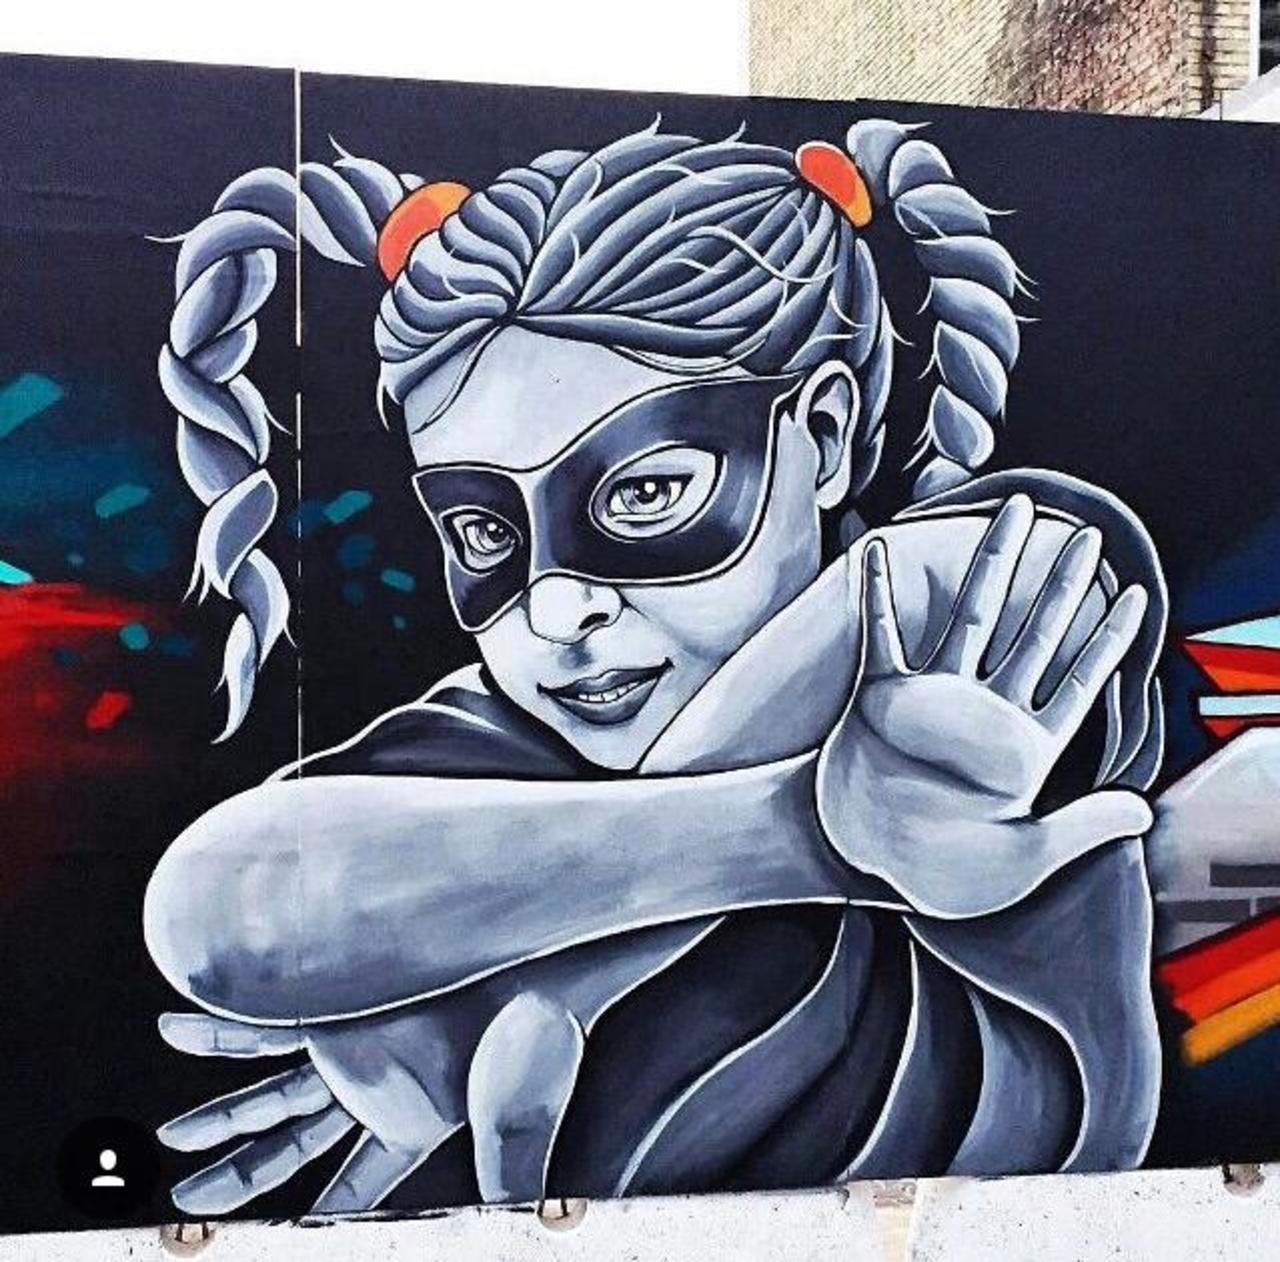 Street Art by Stinehvid 

#art #graffiti #mural #streetart http://t.co/VGXxdI2sd1